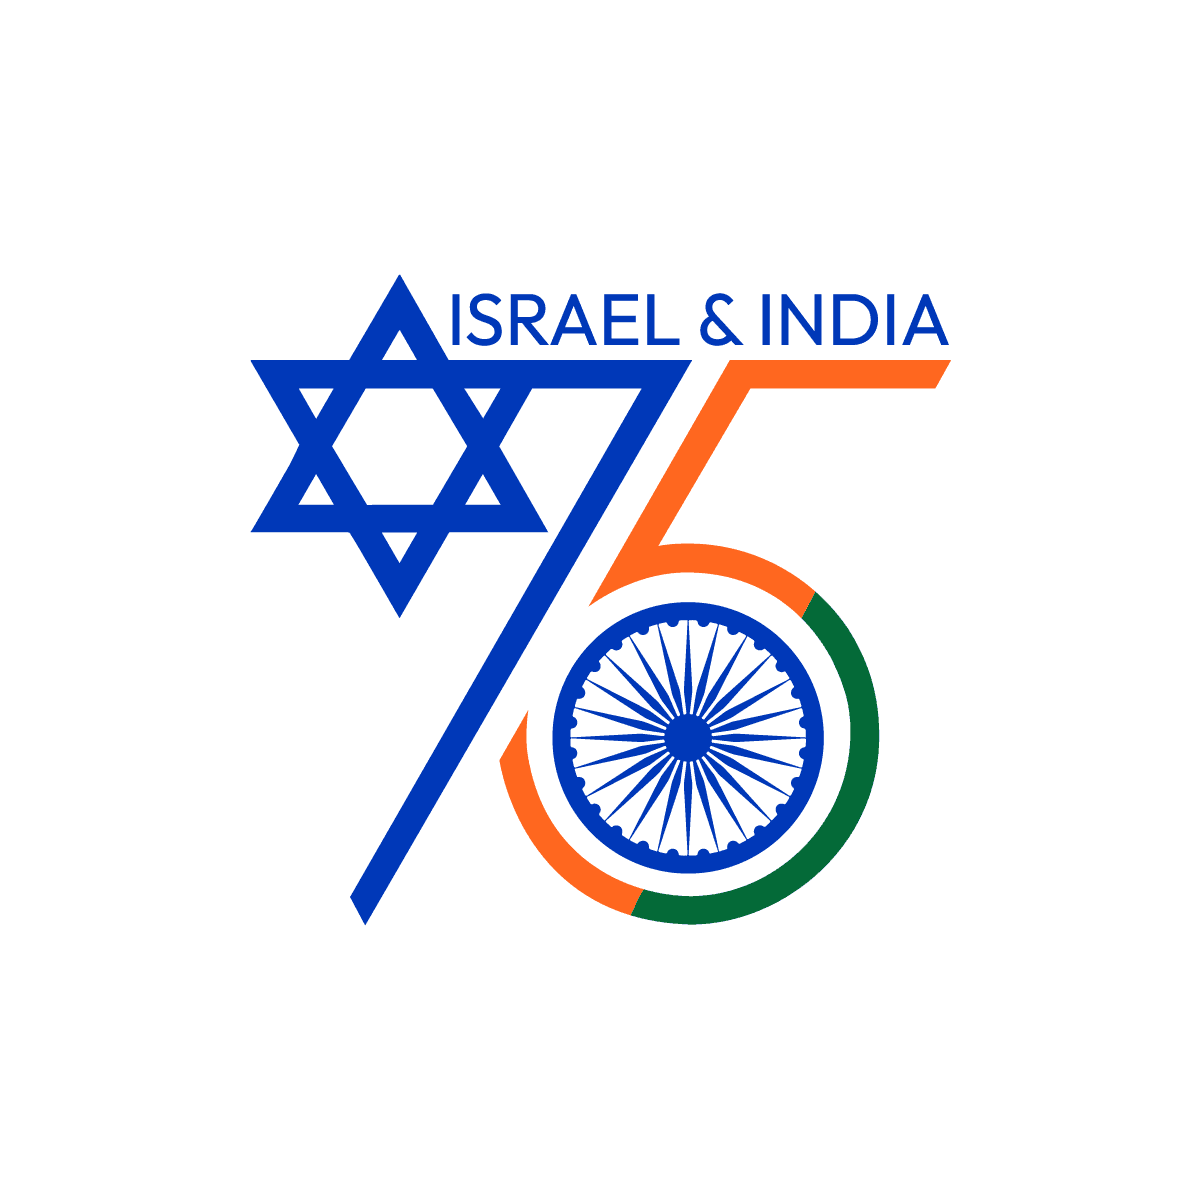 jrc ajc-israel&india-75-20230615-184050.png